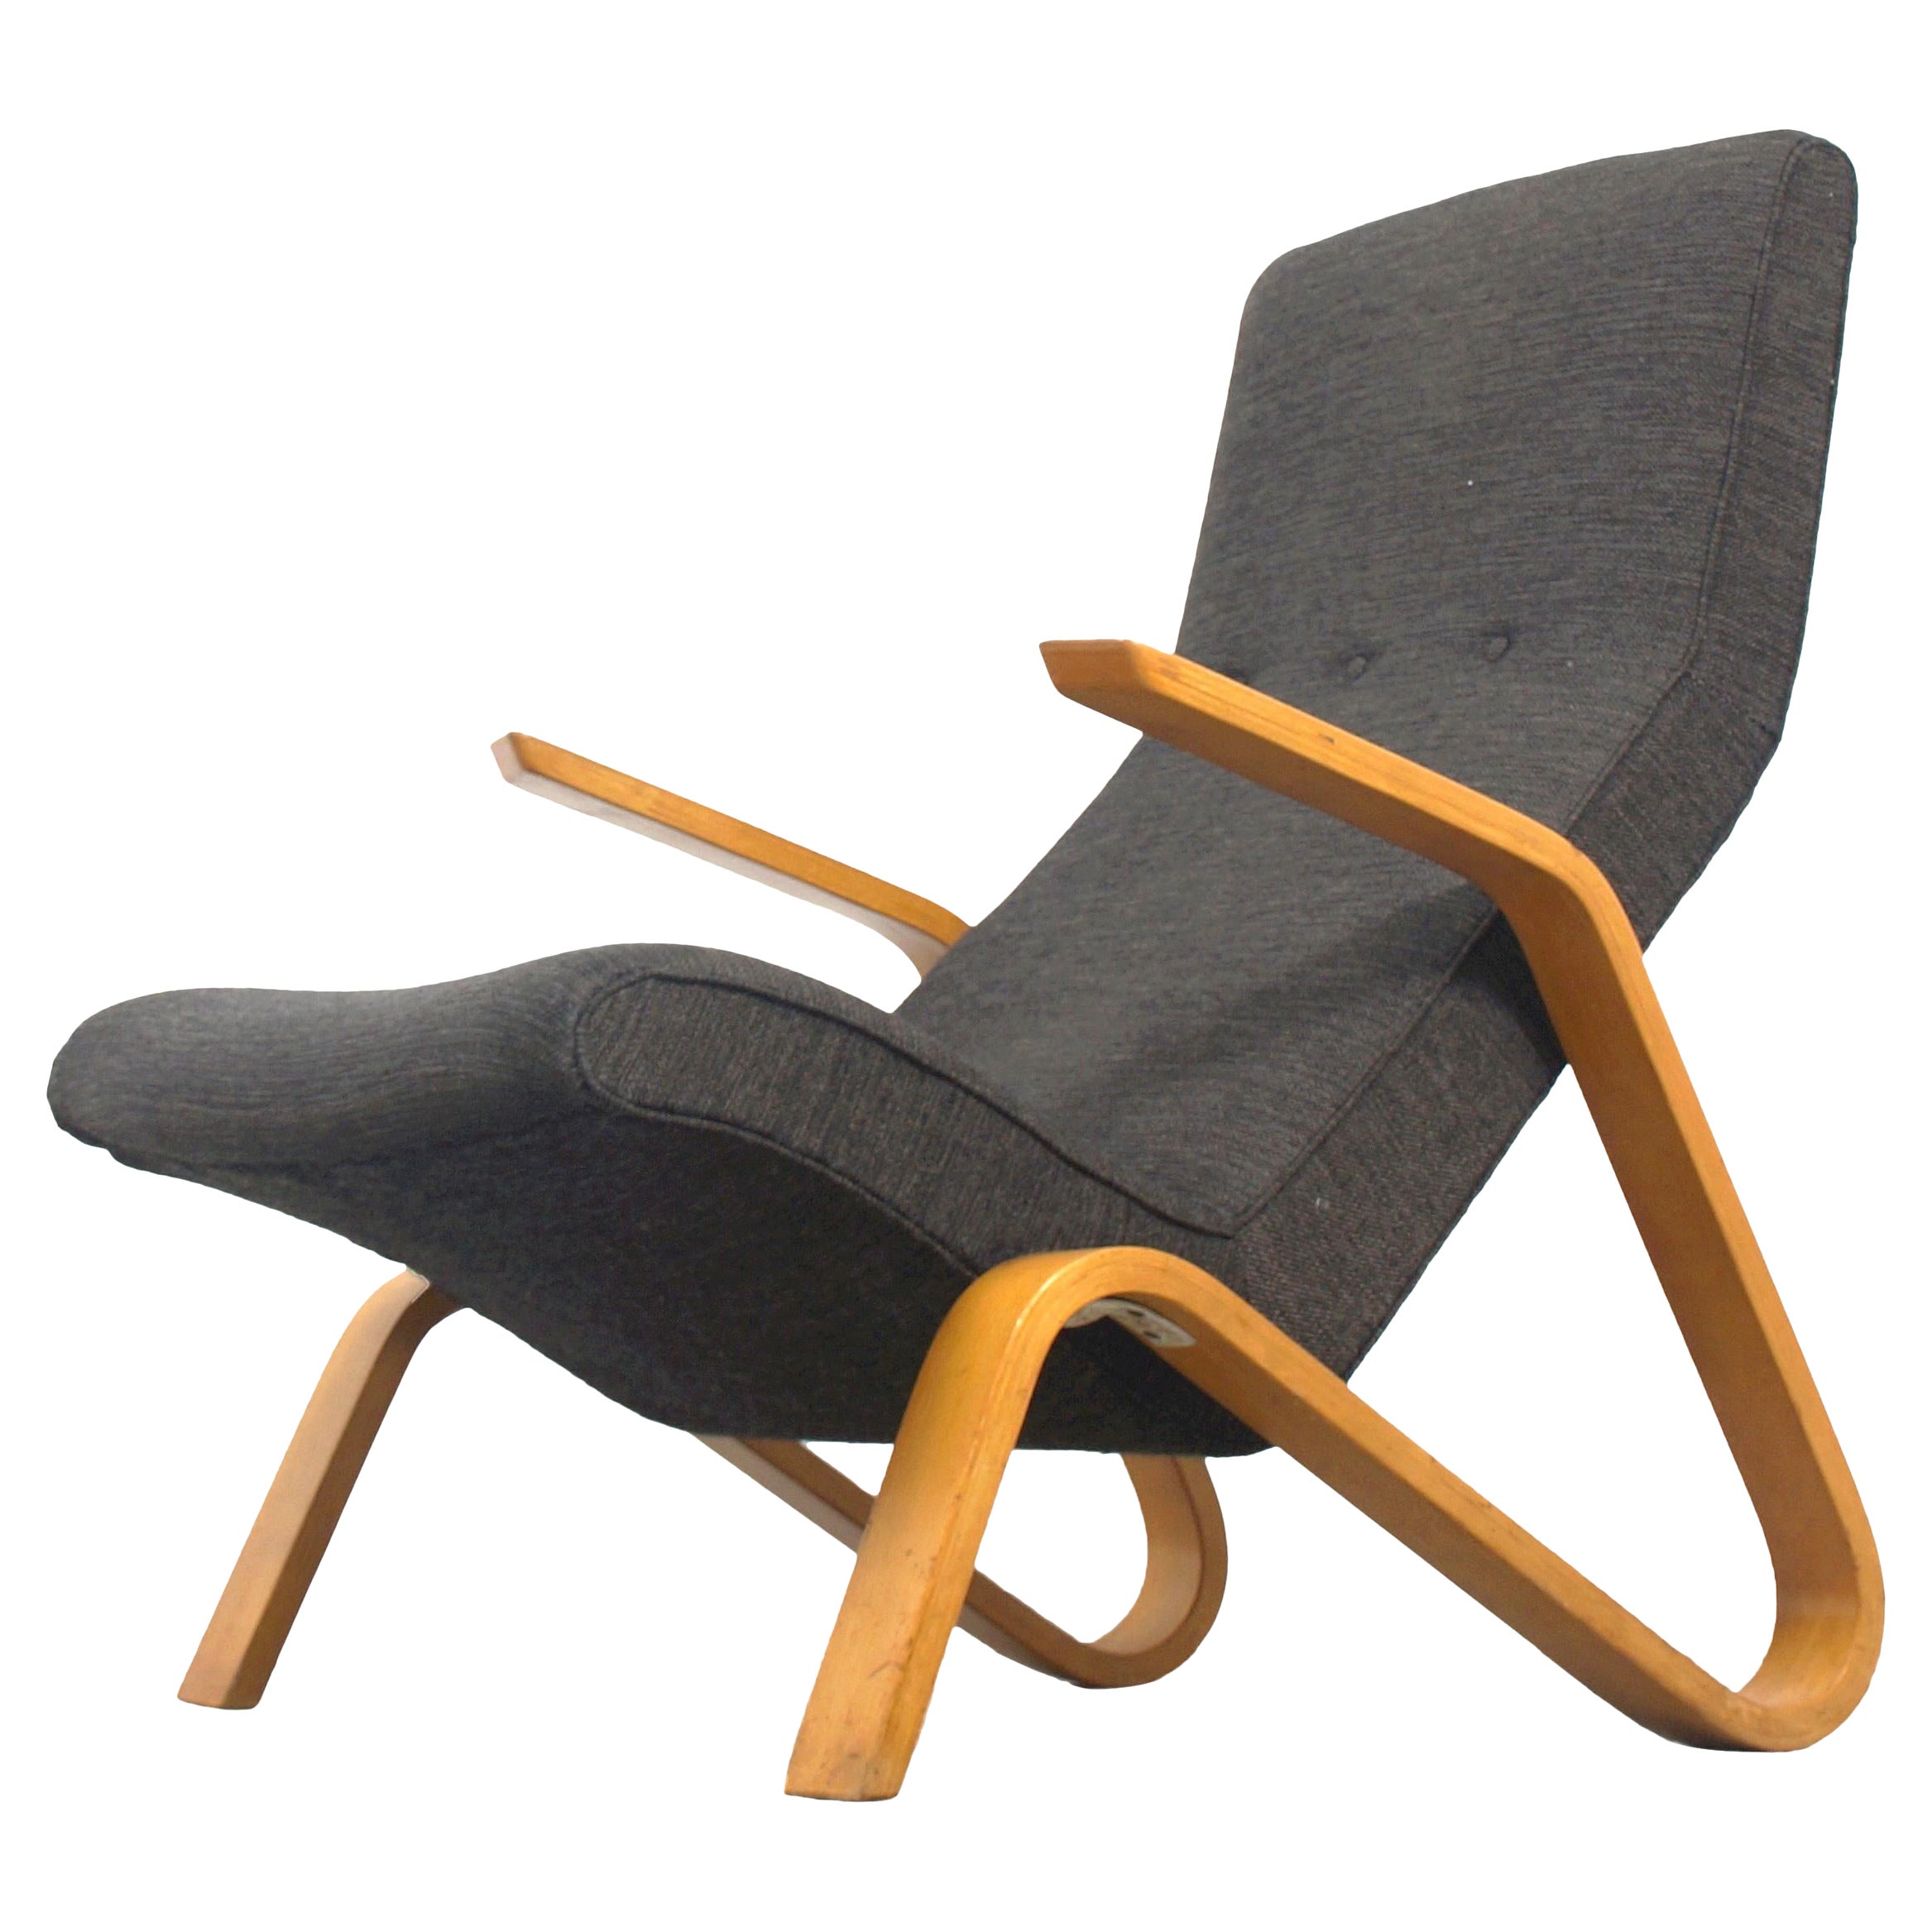 Grasshopper Lounge Chair designed by Eero Saarinen for Knoll International